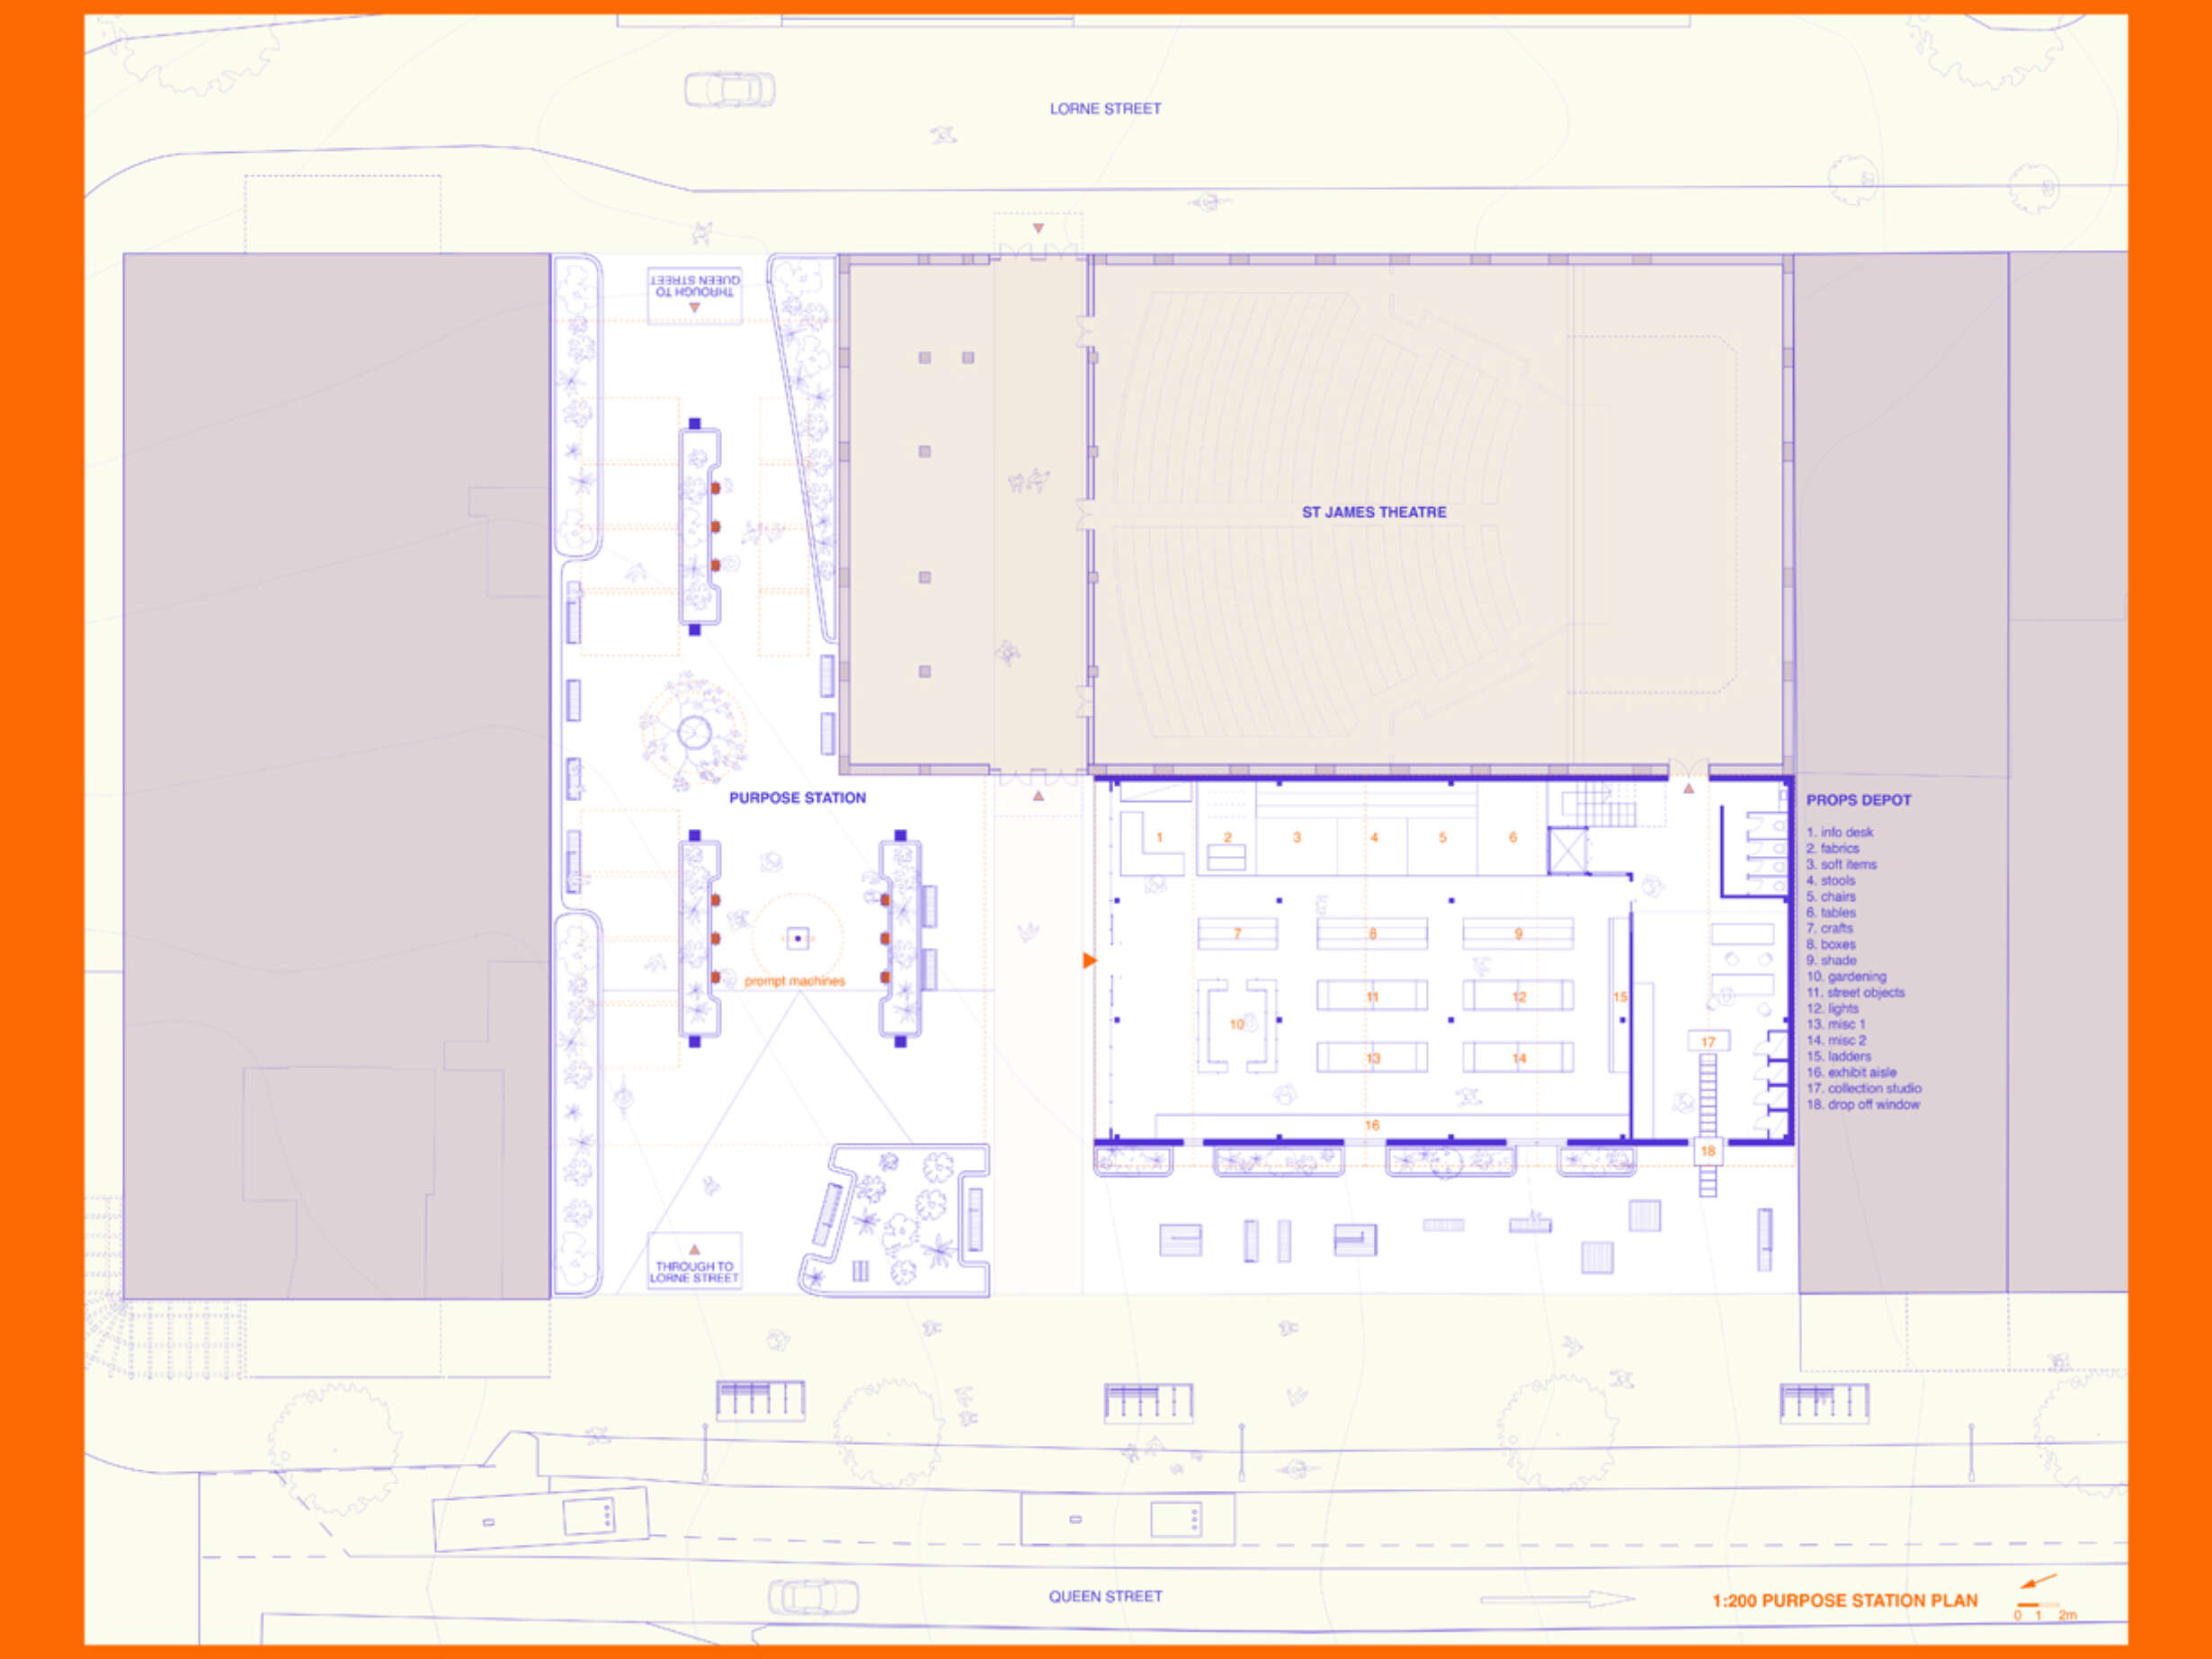 Purpose Station & Props Depot – Ground Floor plan